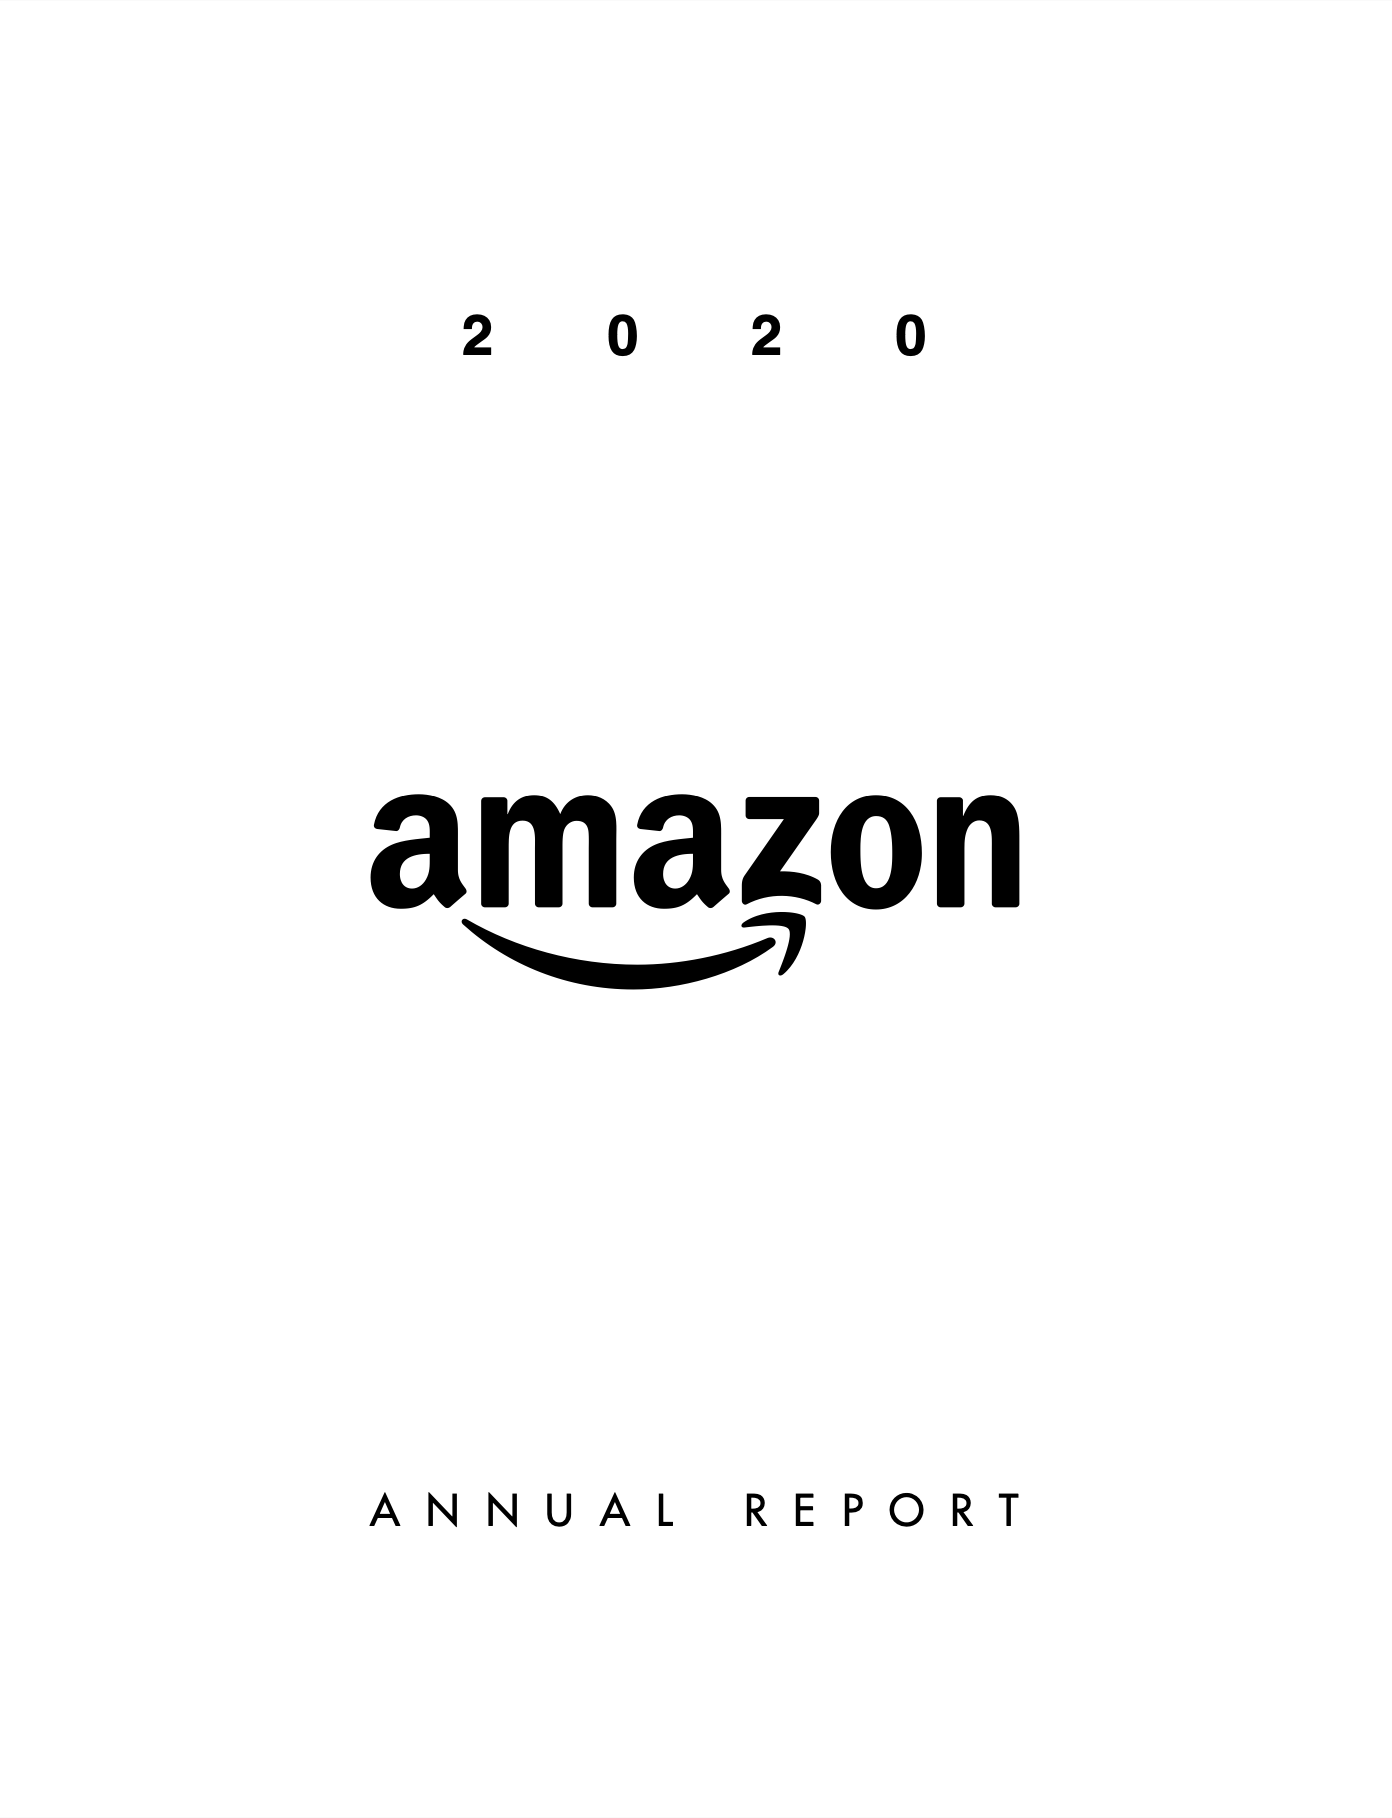 Ejemplo de texto persuasivo: reporte anual de Amazon